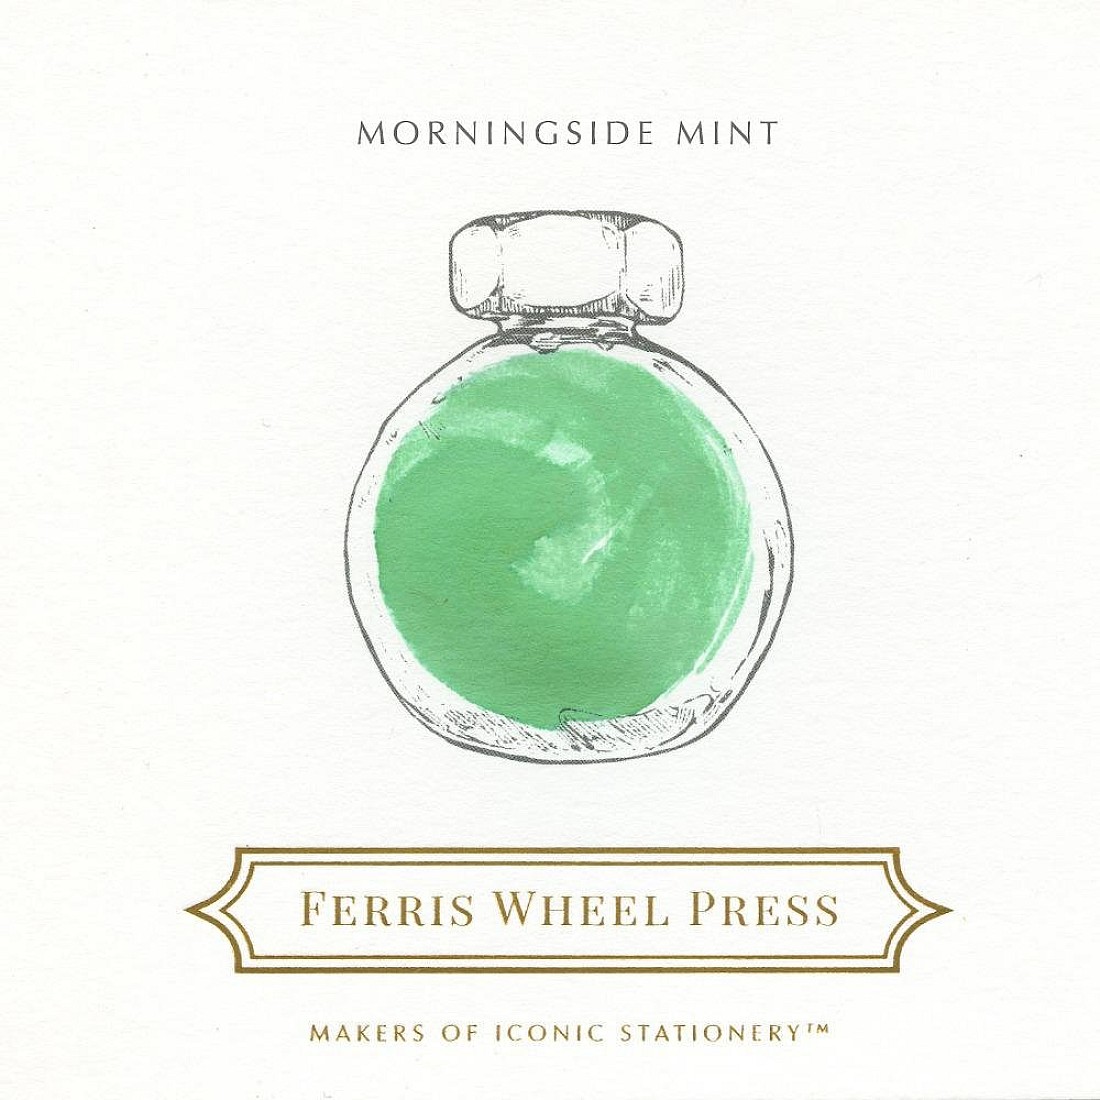 Ferris Wheel Press Morningside Morningside Mint 38 ml Inkwell